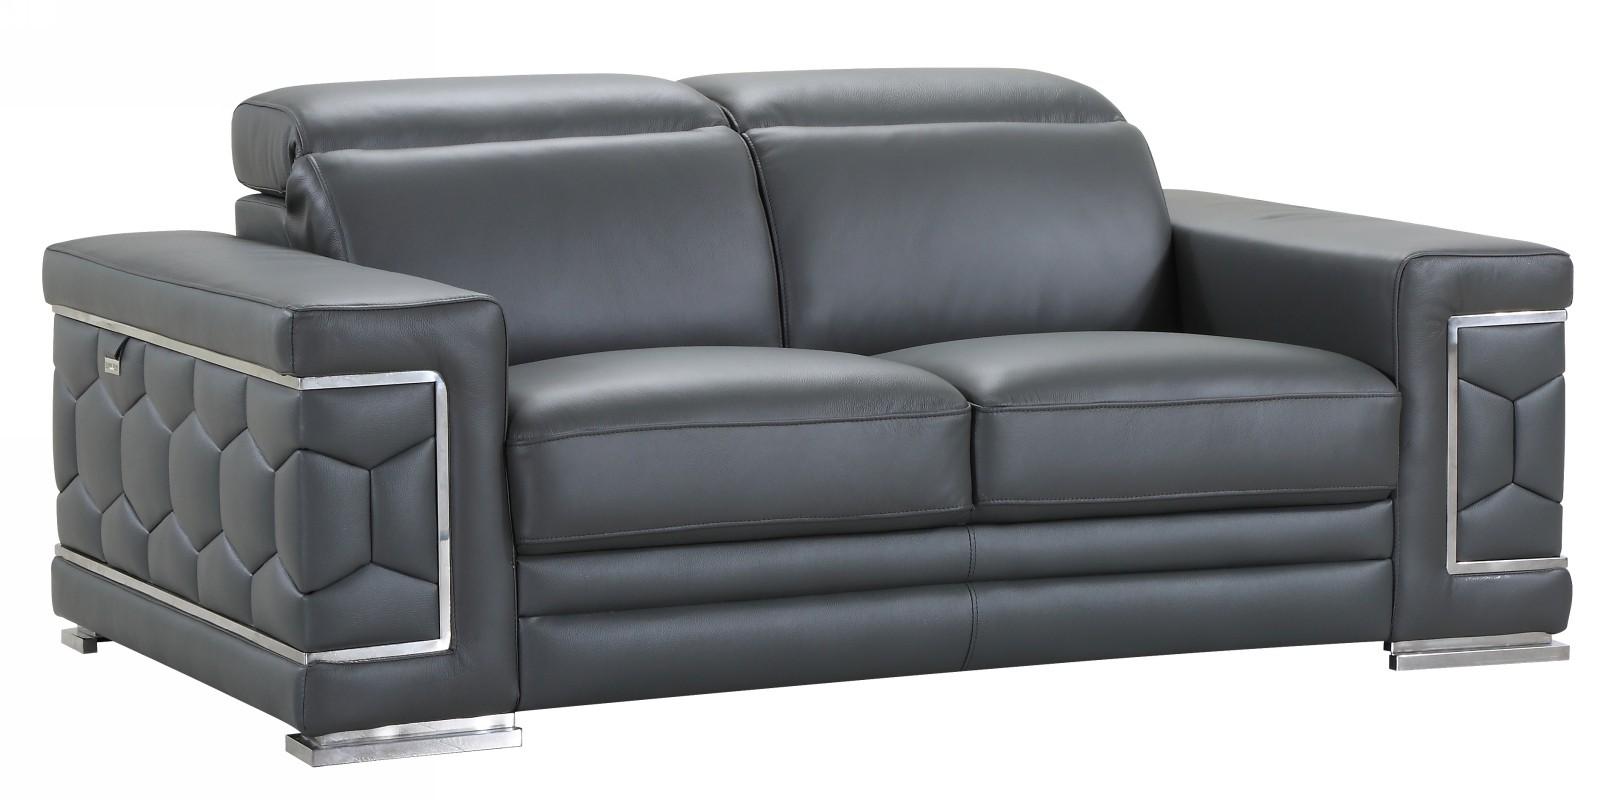 

    
Orren Ellis Hawkesbury Common Sofa Loveseat and Chair Set Dark Gray SKU: ORNL4862
